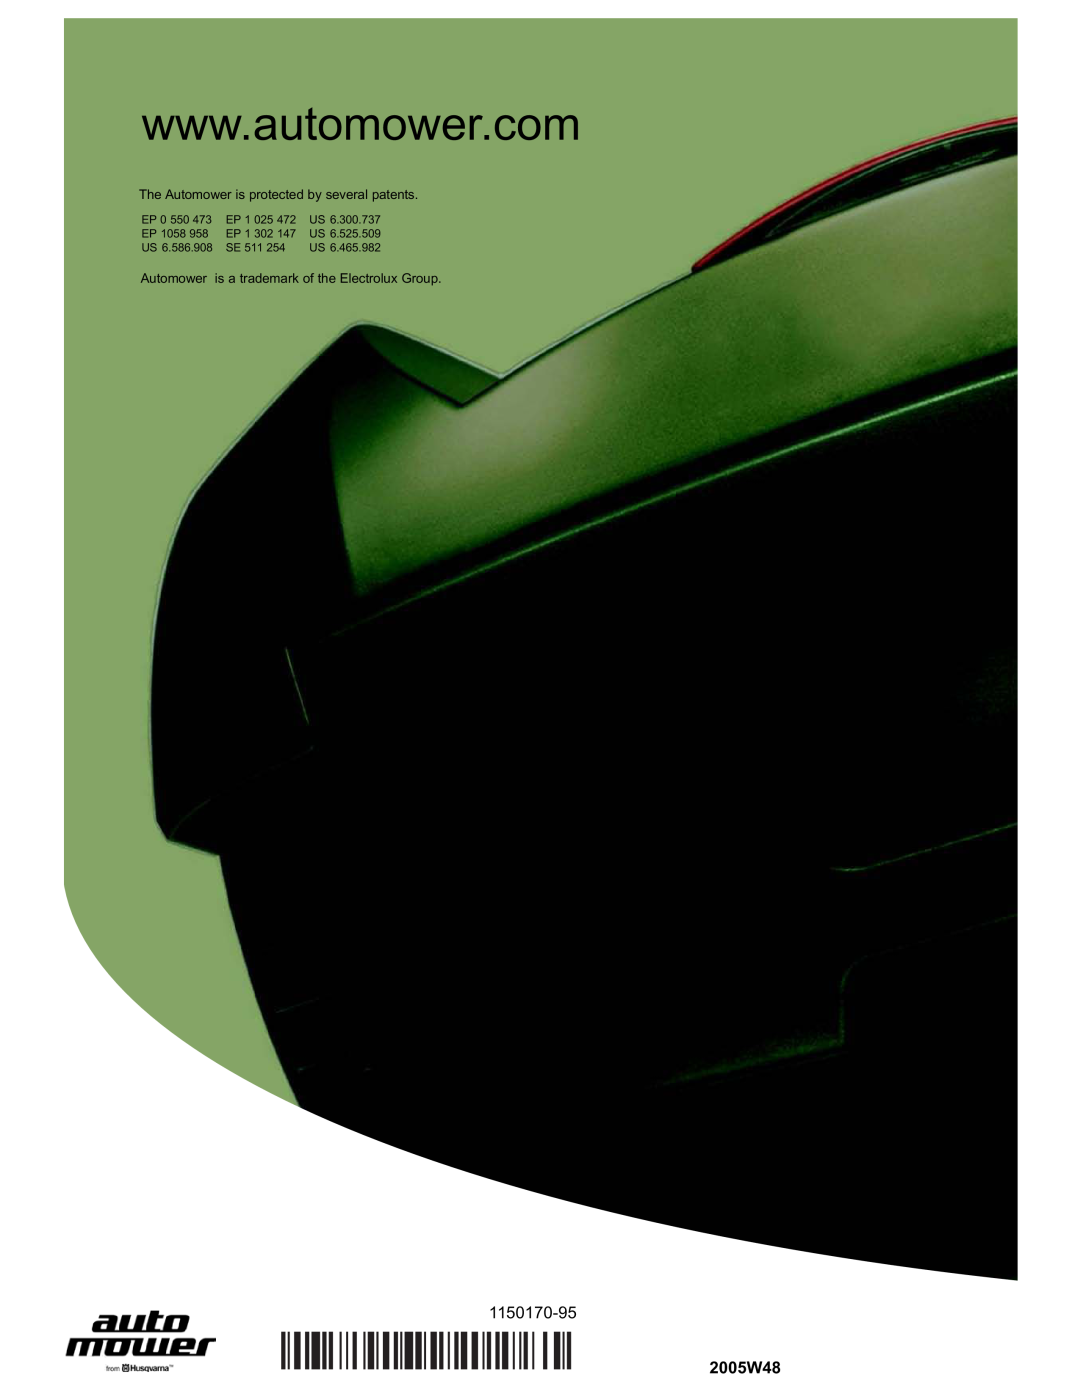 Husqvarna Automower manual 2005W48, EP 0 550, EP 1 025, EP 1058, EP 1 302, SE 511 